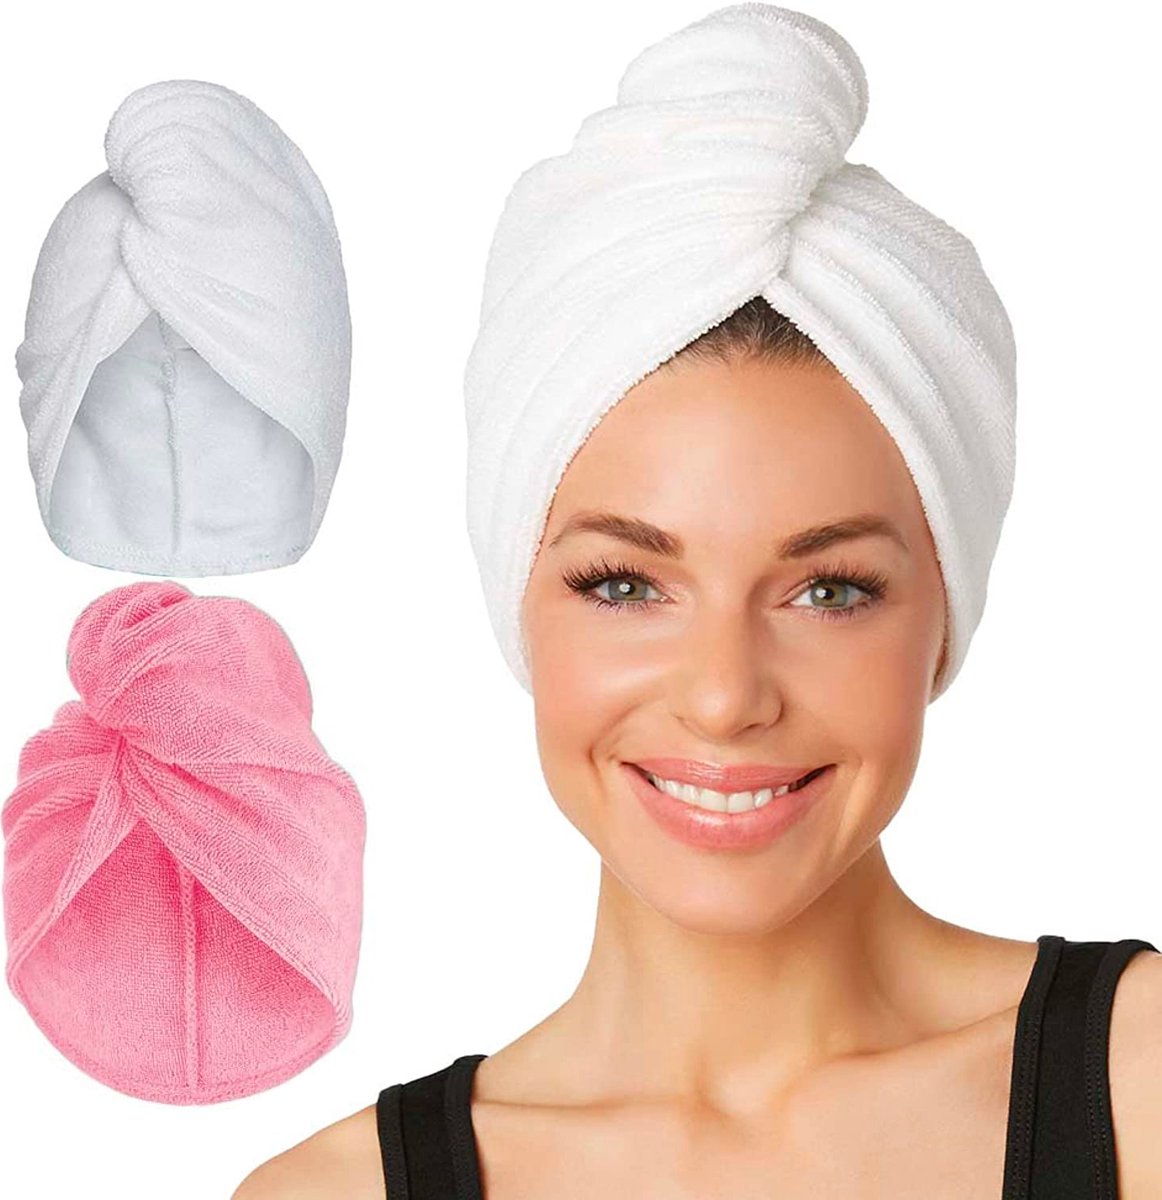 Haarhandoek - Wit - Hair Towel - Haarhanddoek Microvezel - Hoofdhanddoek - Snel Drogend